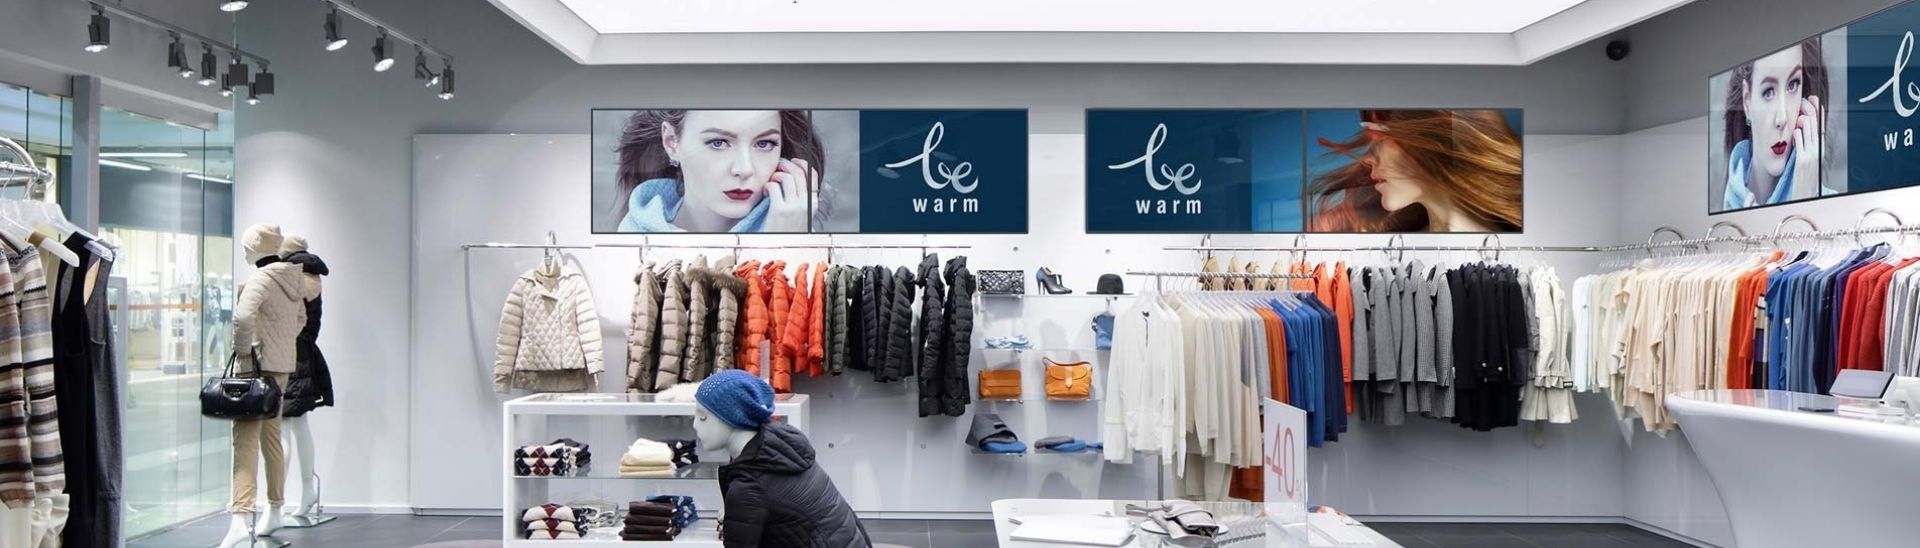 Indoor Digital Signage in clothes stores